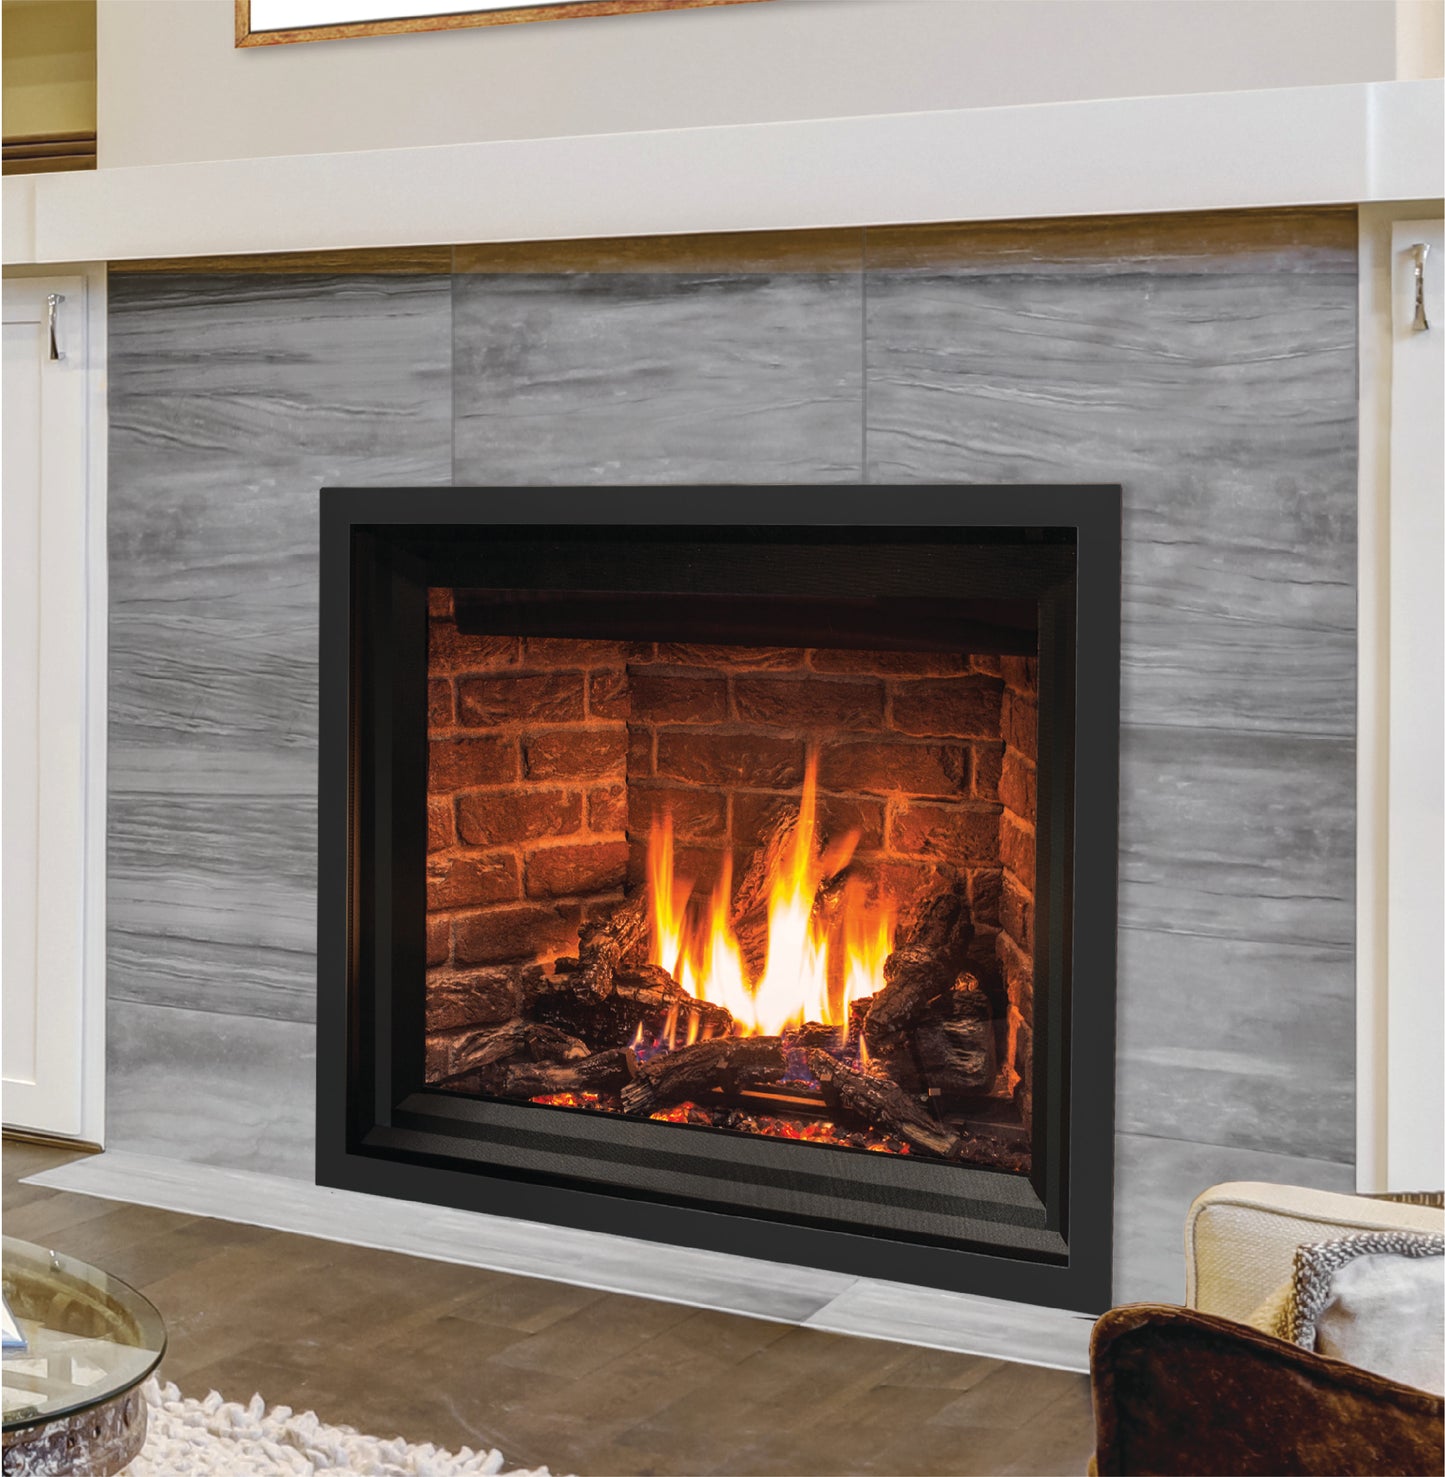 Enviro G Series Glass Burner Traditional Gas or Propane Fireplace